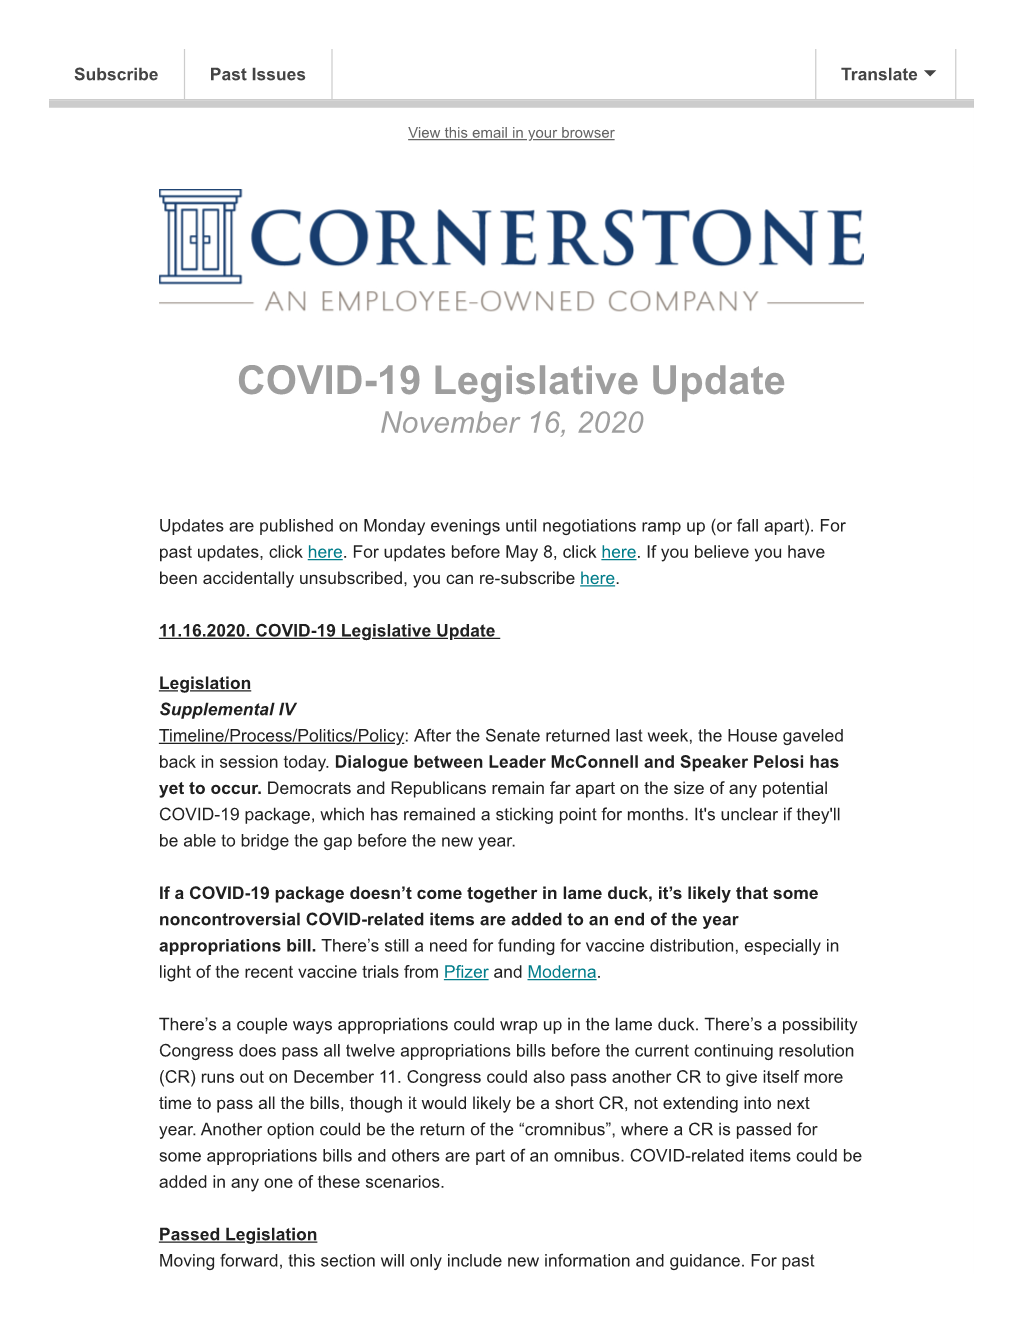 COVID-19 Legislative Update November 16, 2020